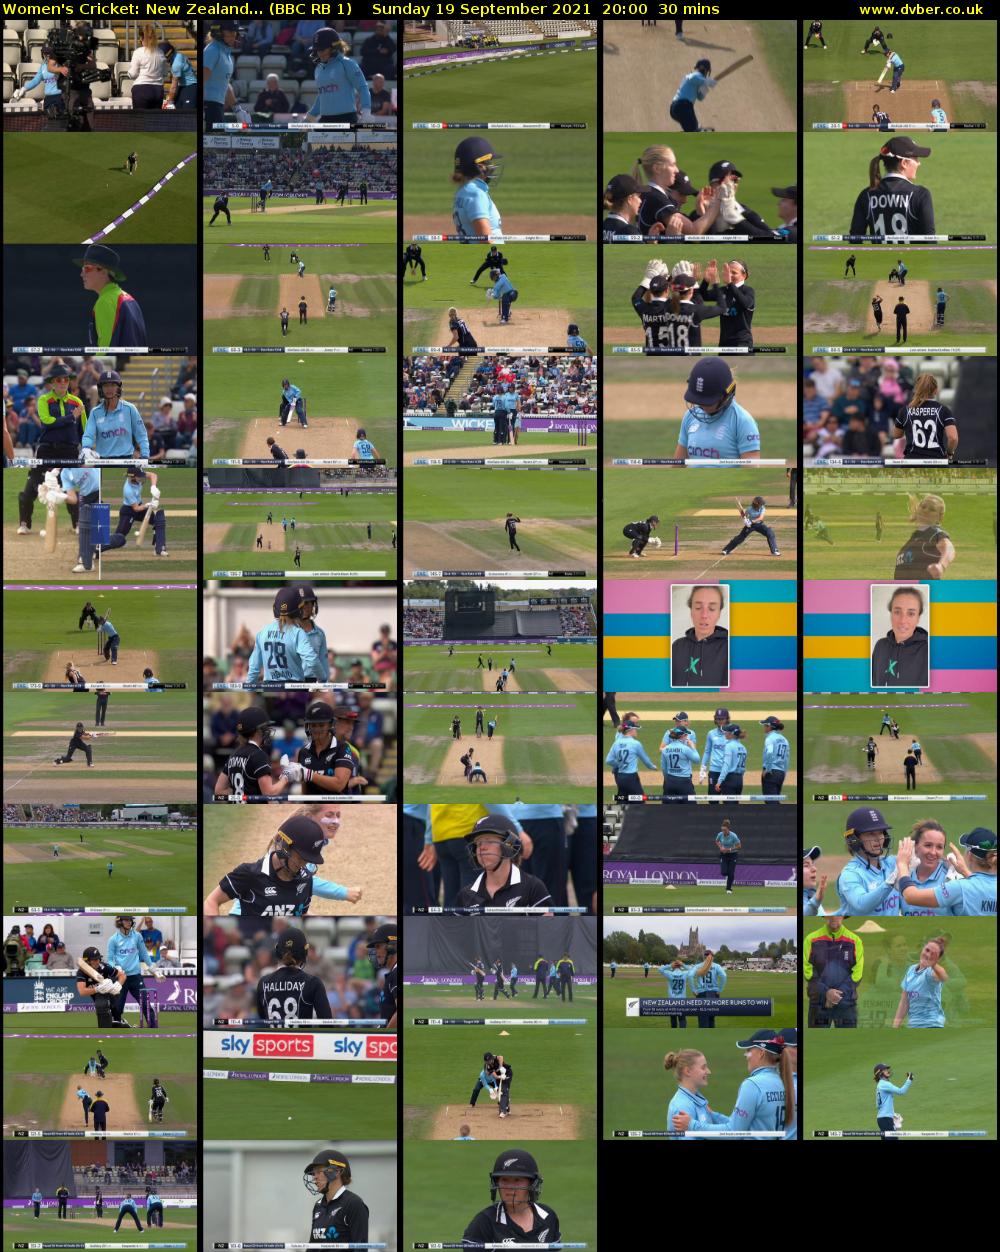 Women's Cricket: New Zealand... (BBC RB 1) Sunday 19 September 2021 20:00 - 20:30